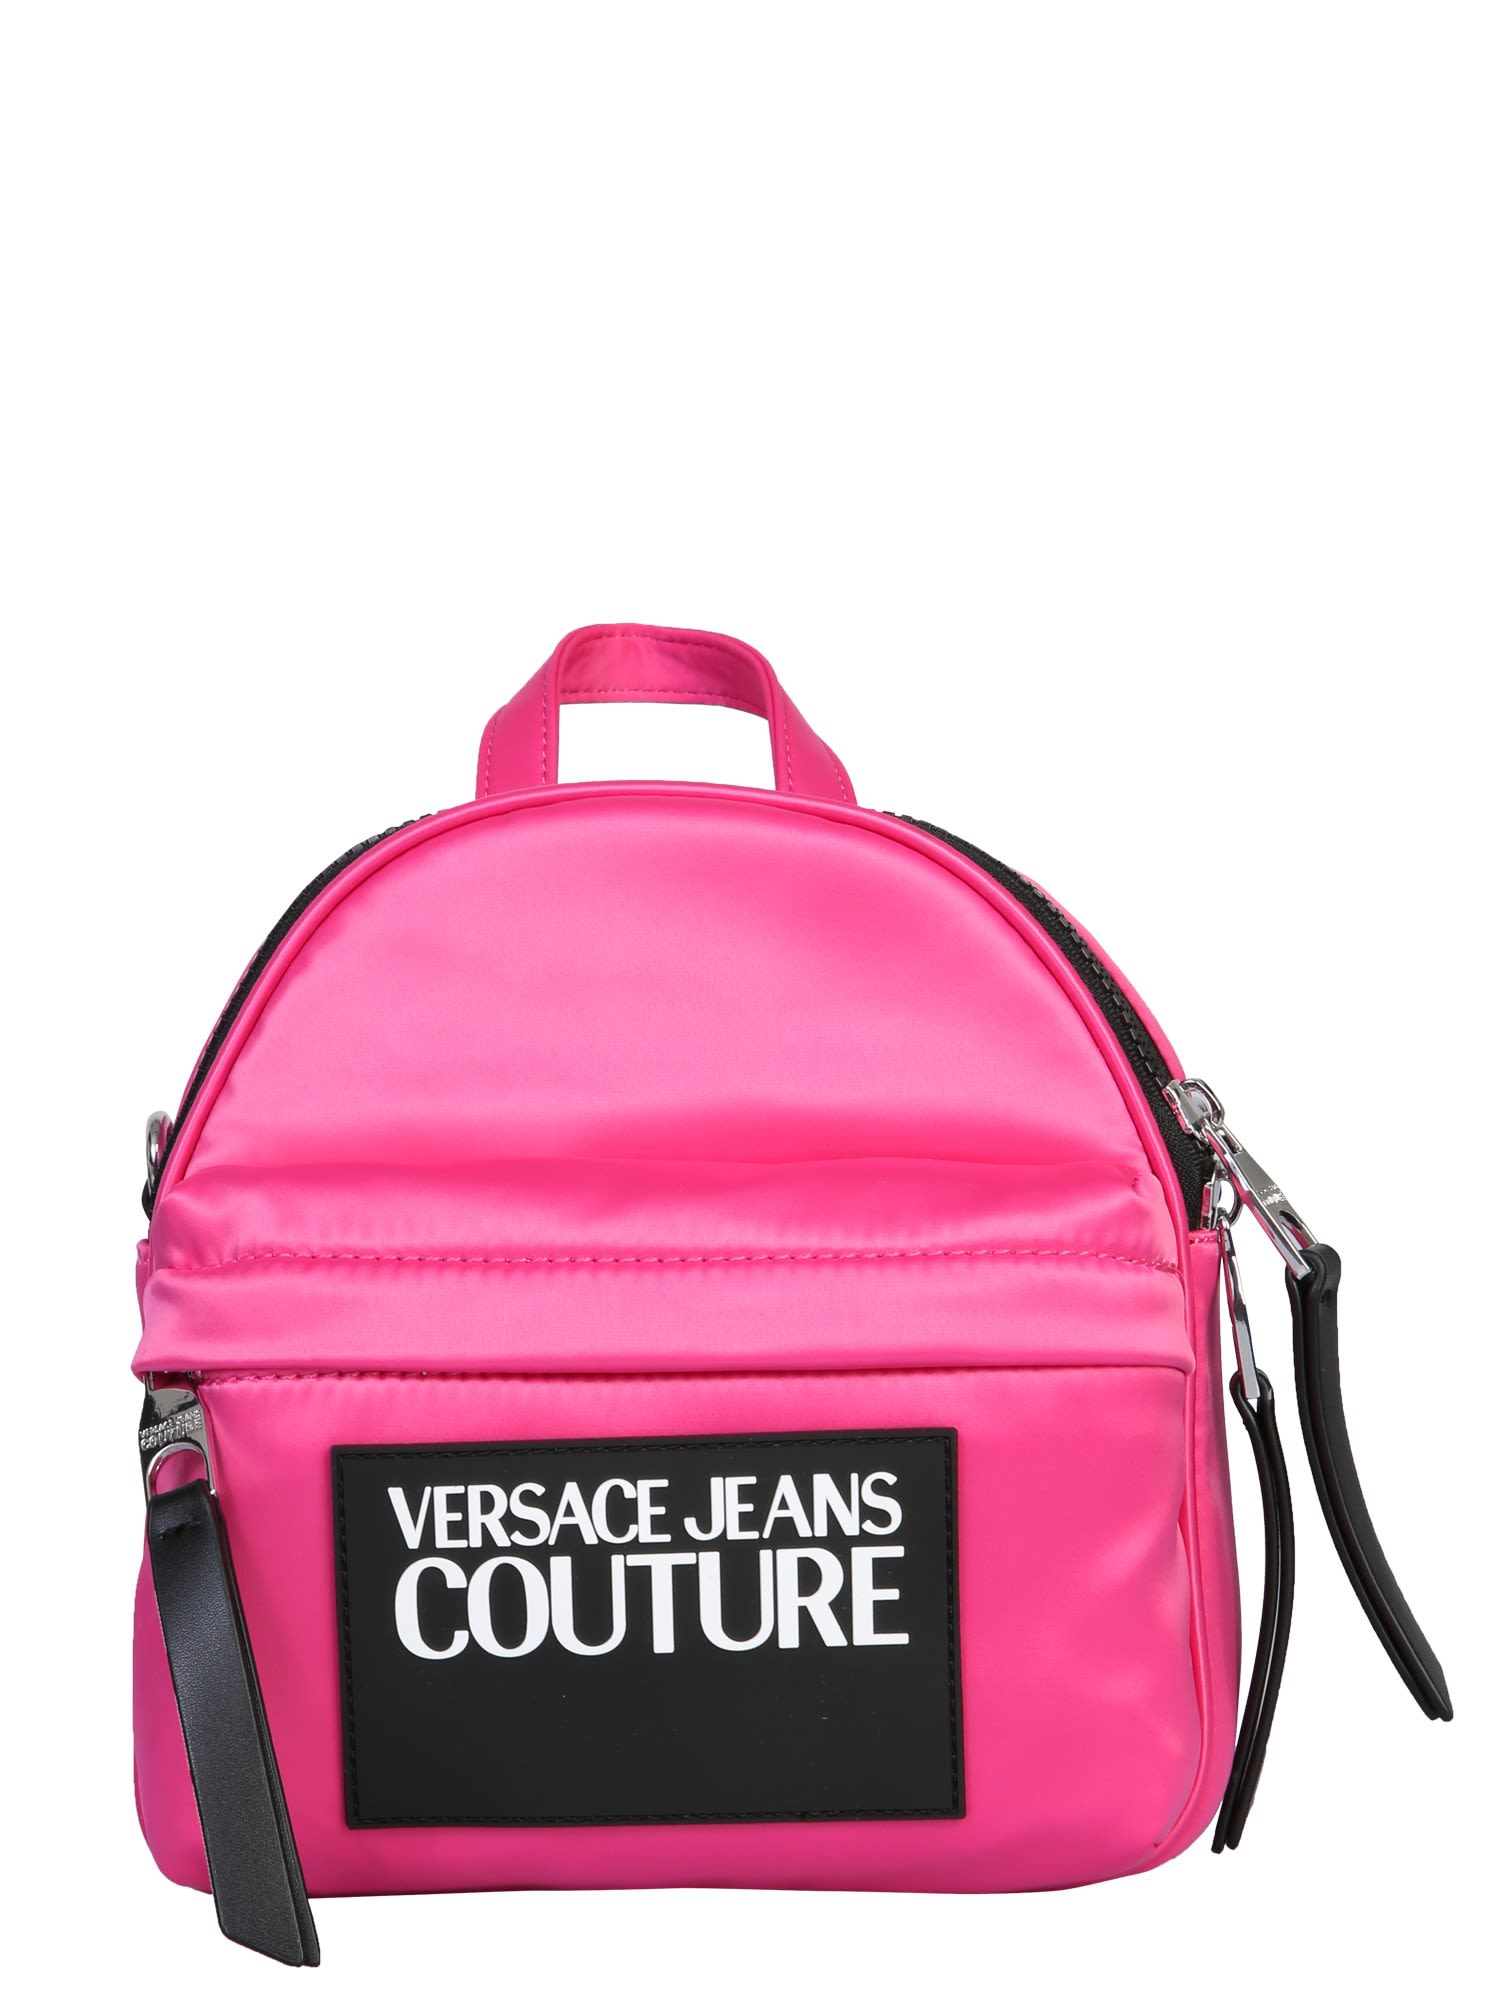 versace jeans mini backpack